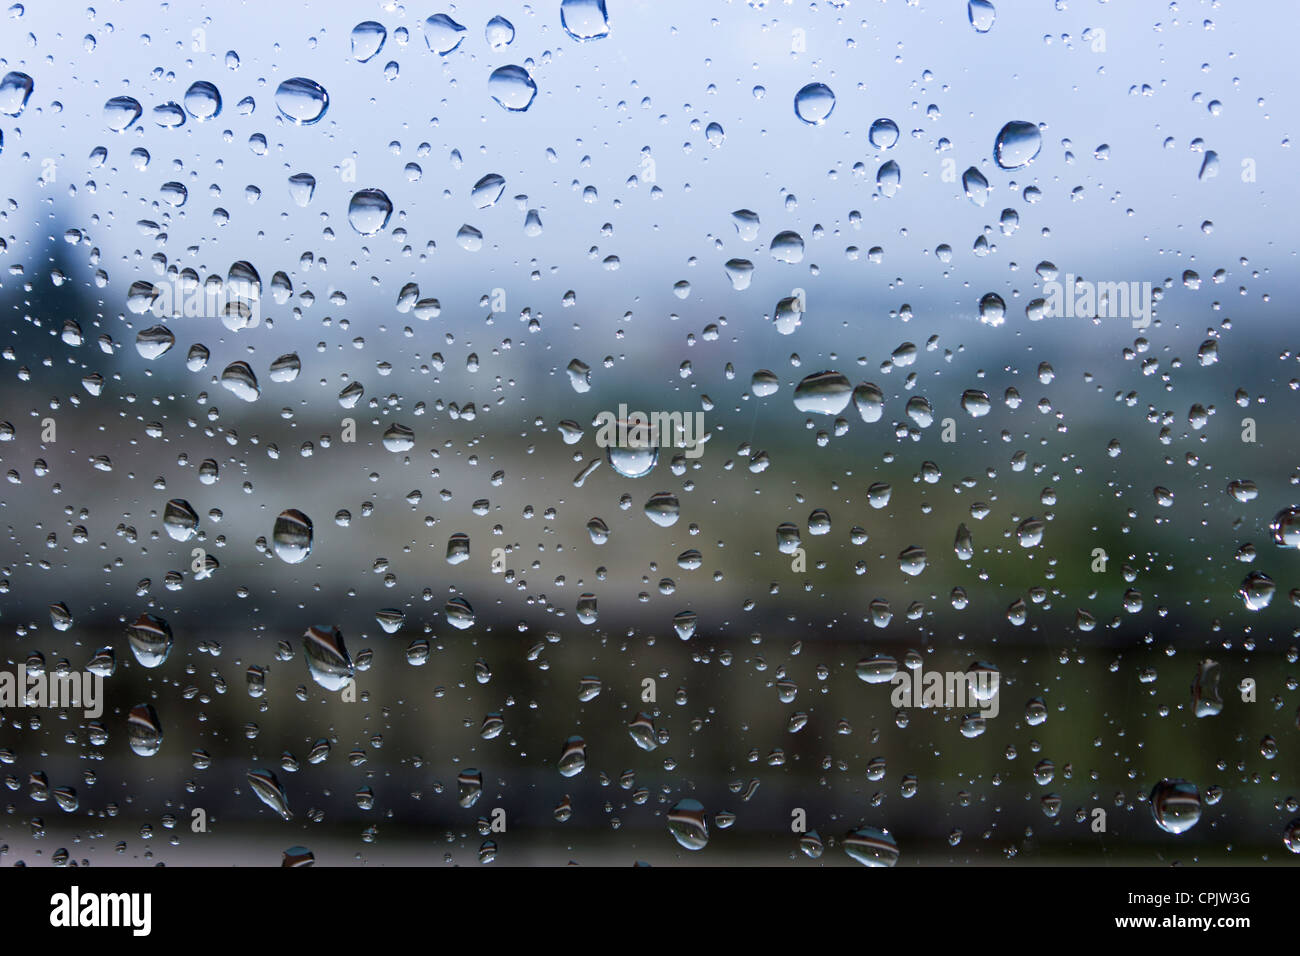 Raindrops on windowpane. Stock Photo